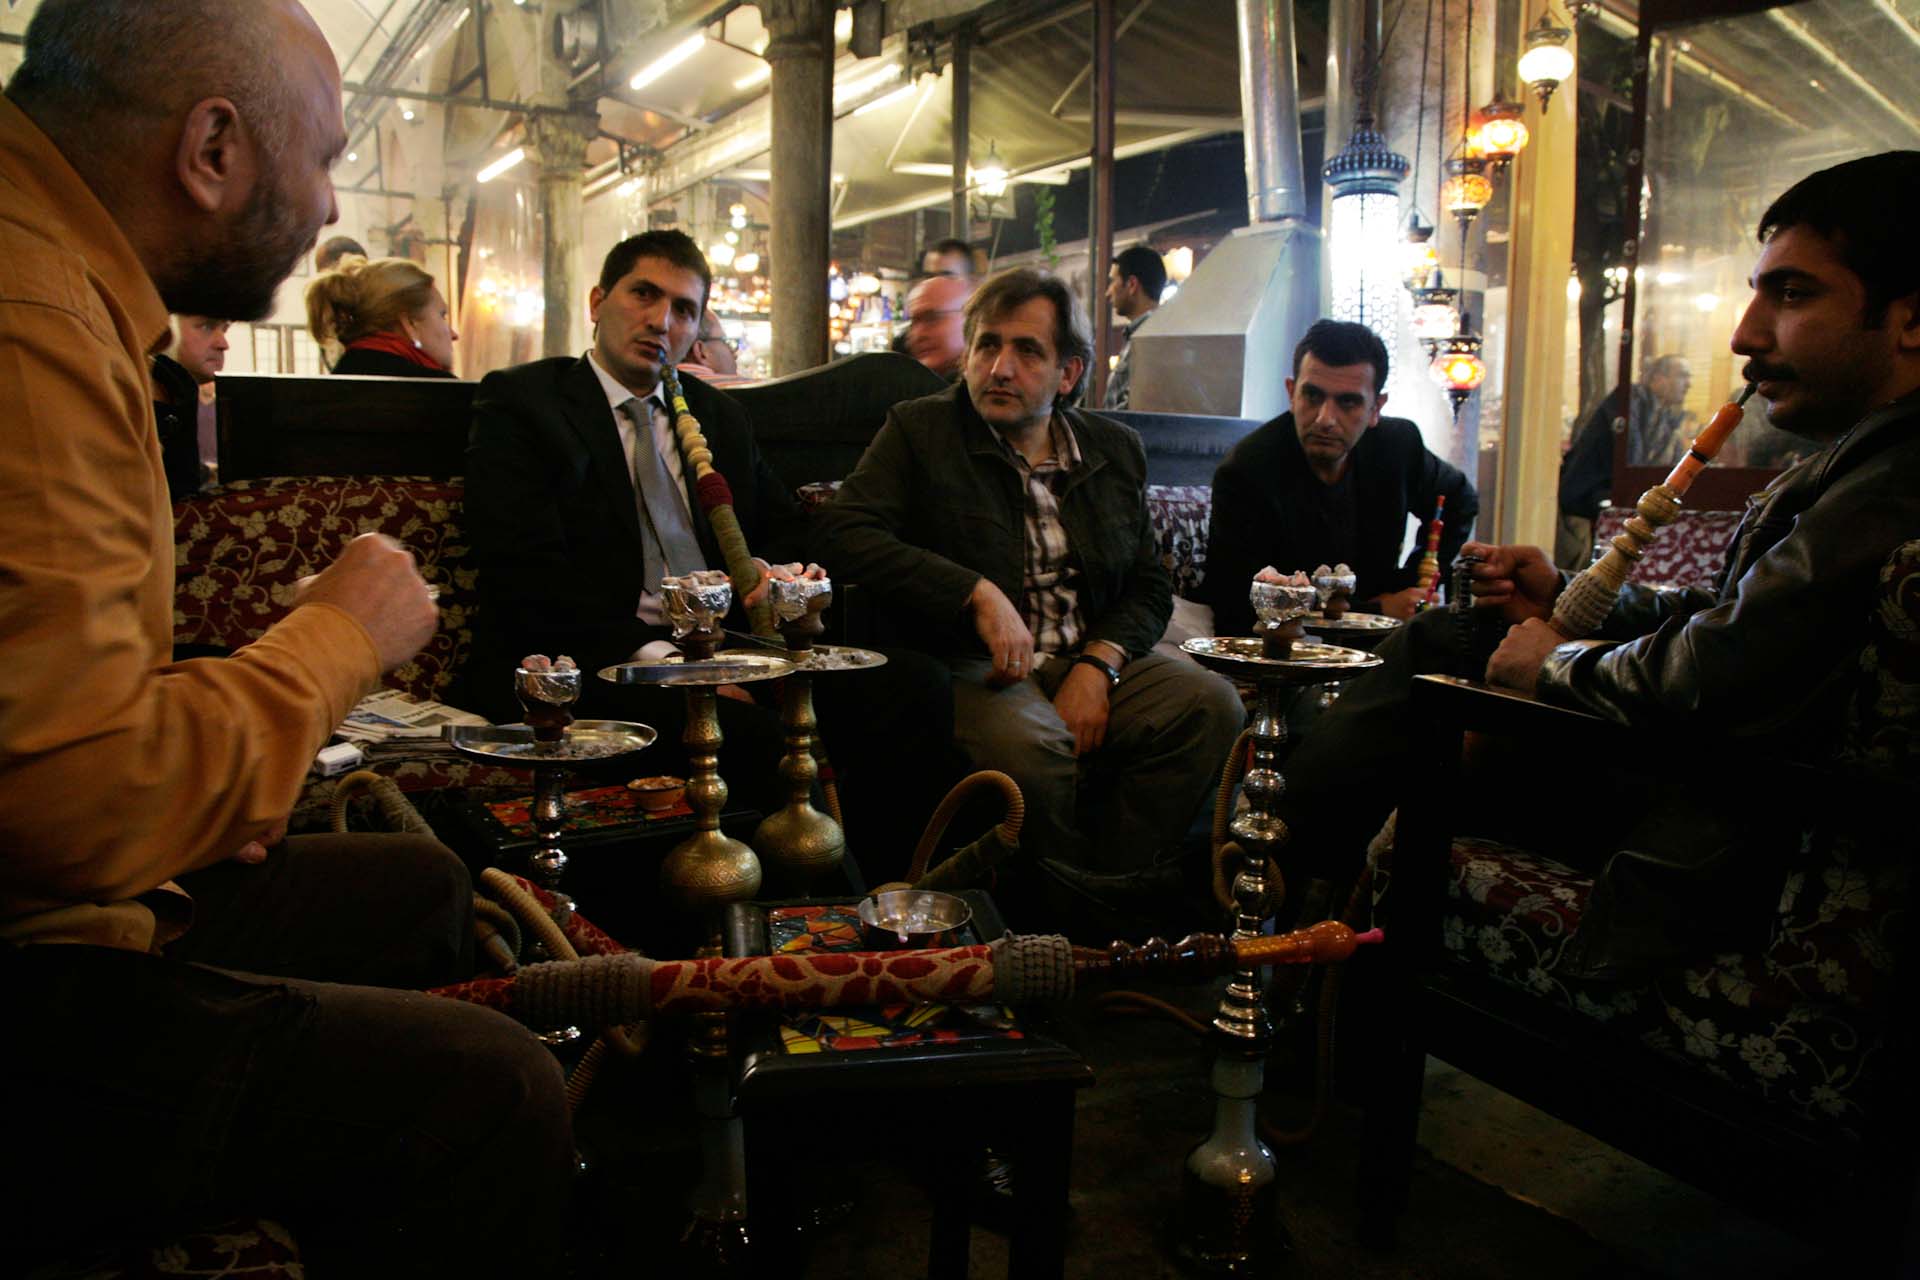 Friends having after work meeting at the nargile cafe in Çemberlitaş